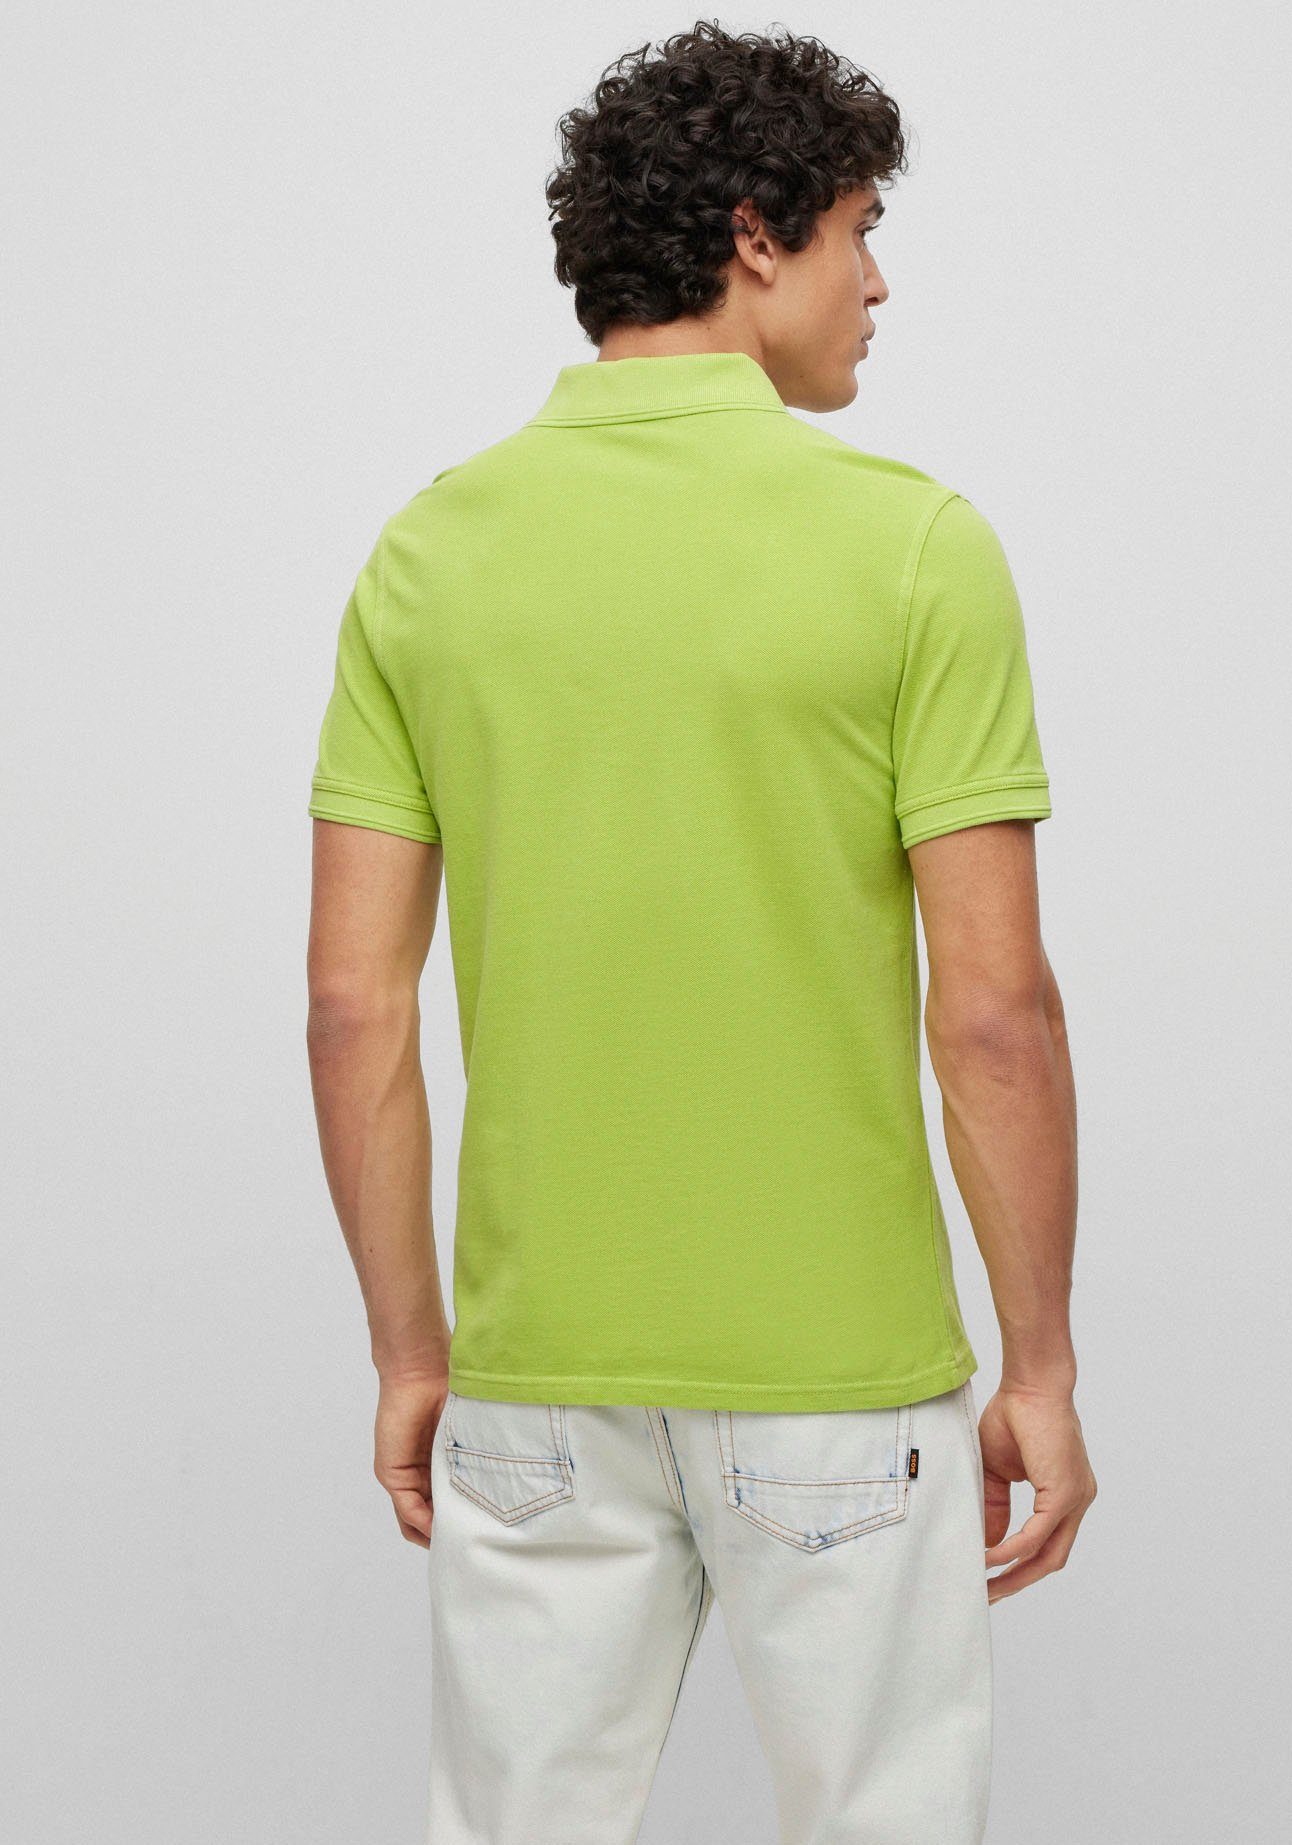 ORANGE Poloshirt Prime Green am Brustkorb Bright mit Logoschriftzug BOSS